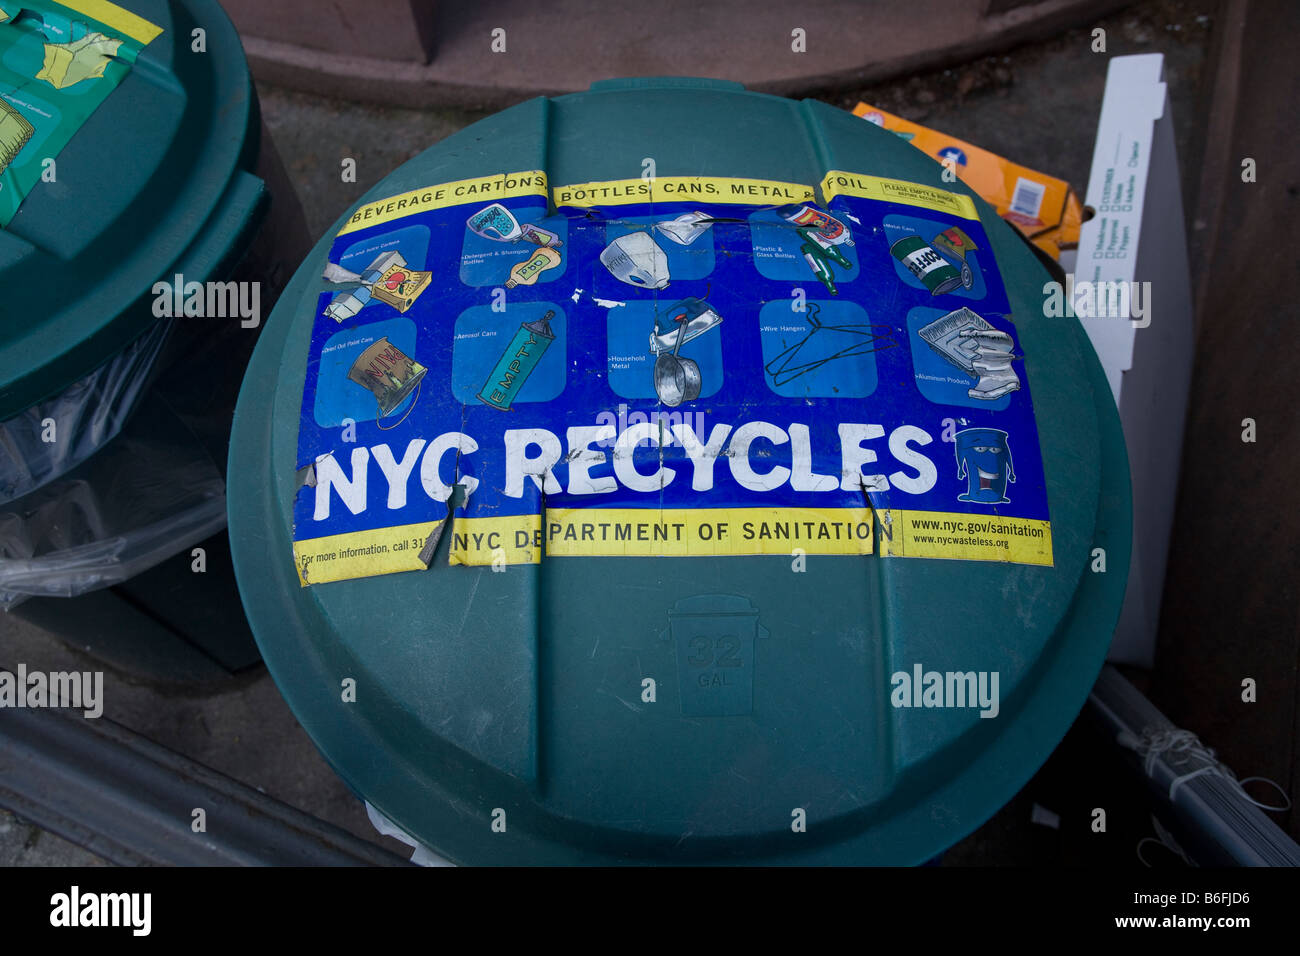 Recycling-Papier-Kunststoff-Glas und Aluminium ist jetzt obligatorisch in New York City Stockfoto